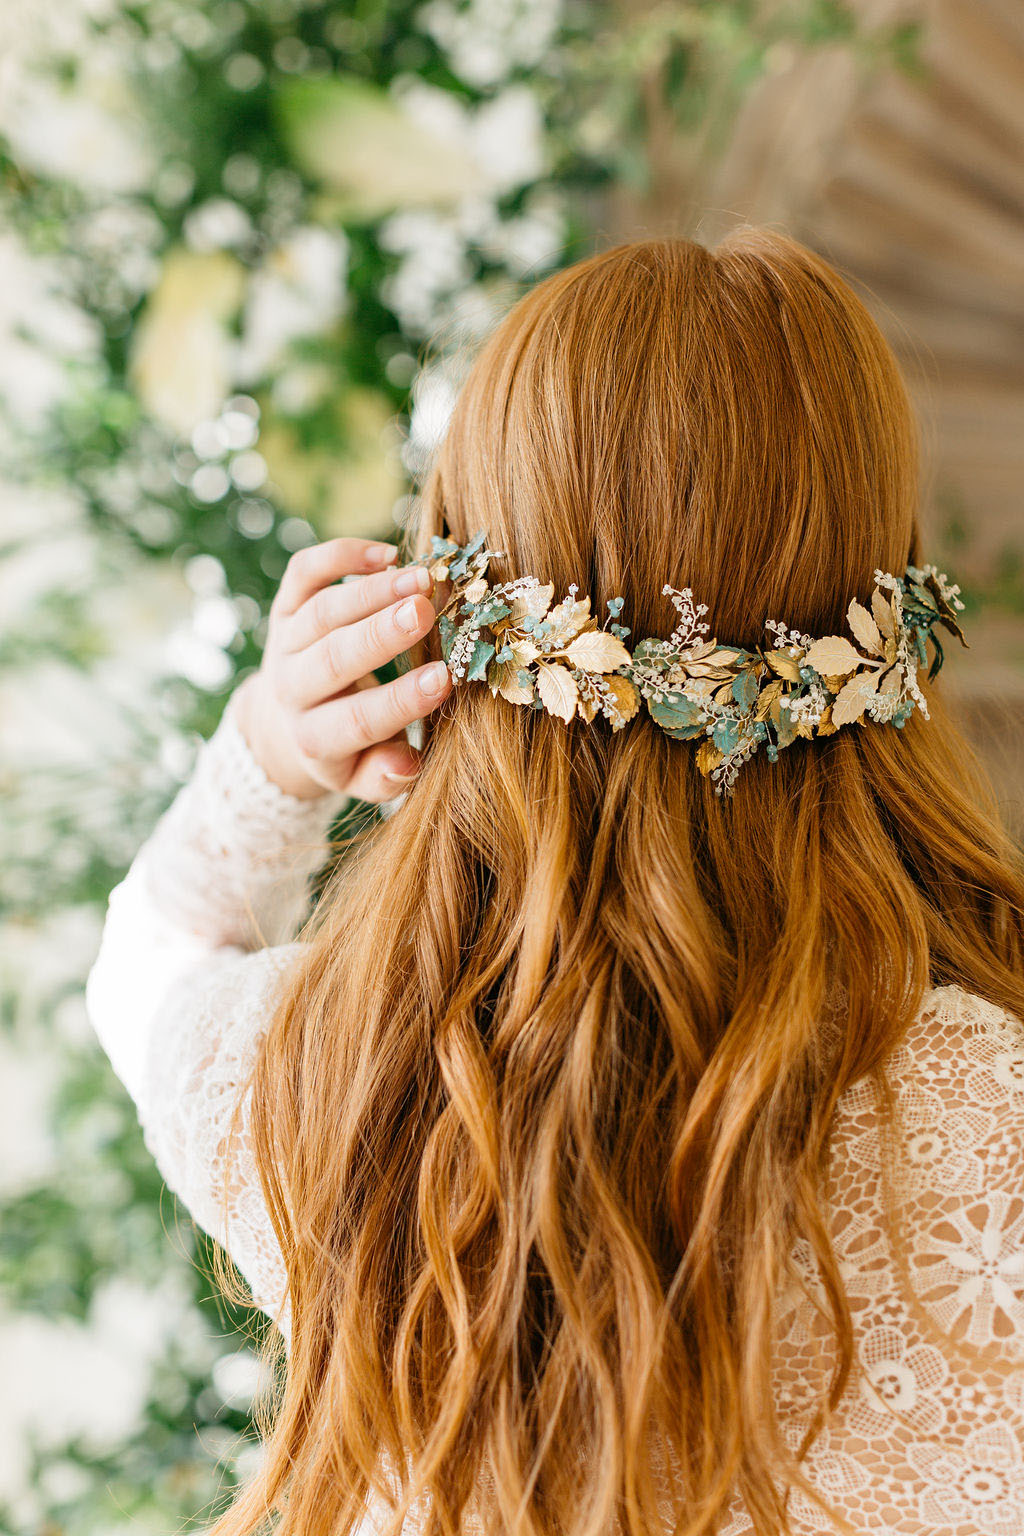 Heirloom bridal accessories by Clare Lloyd